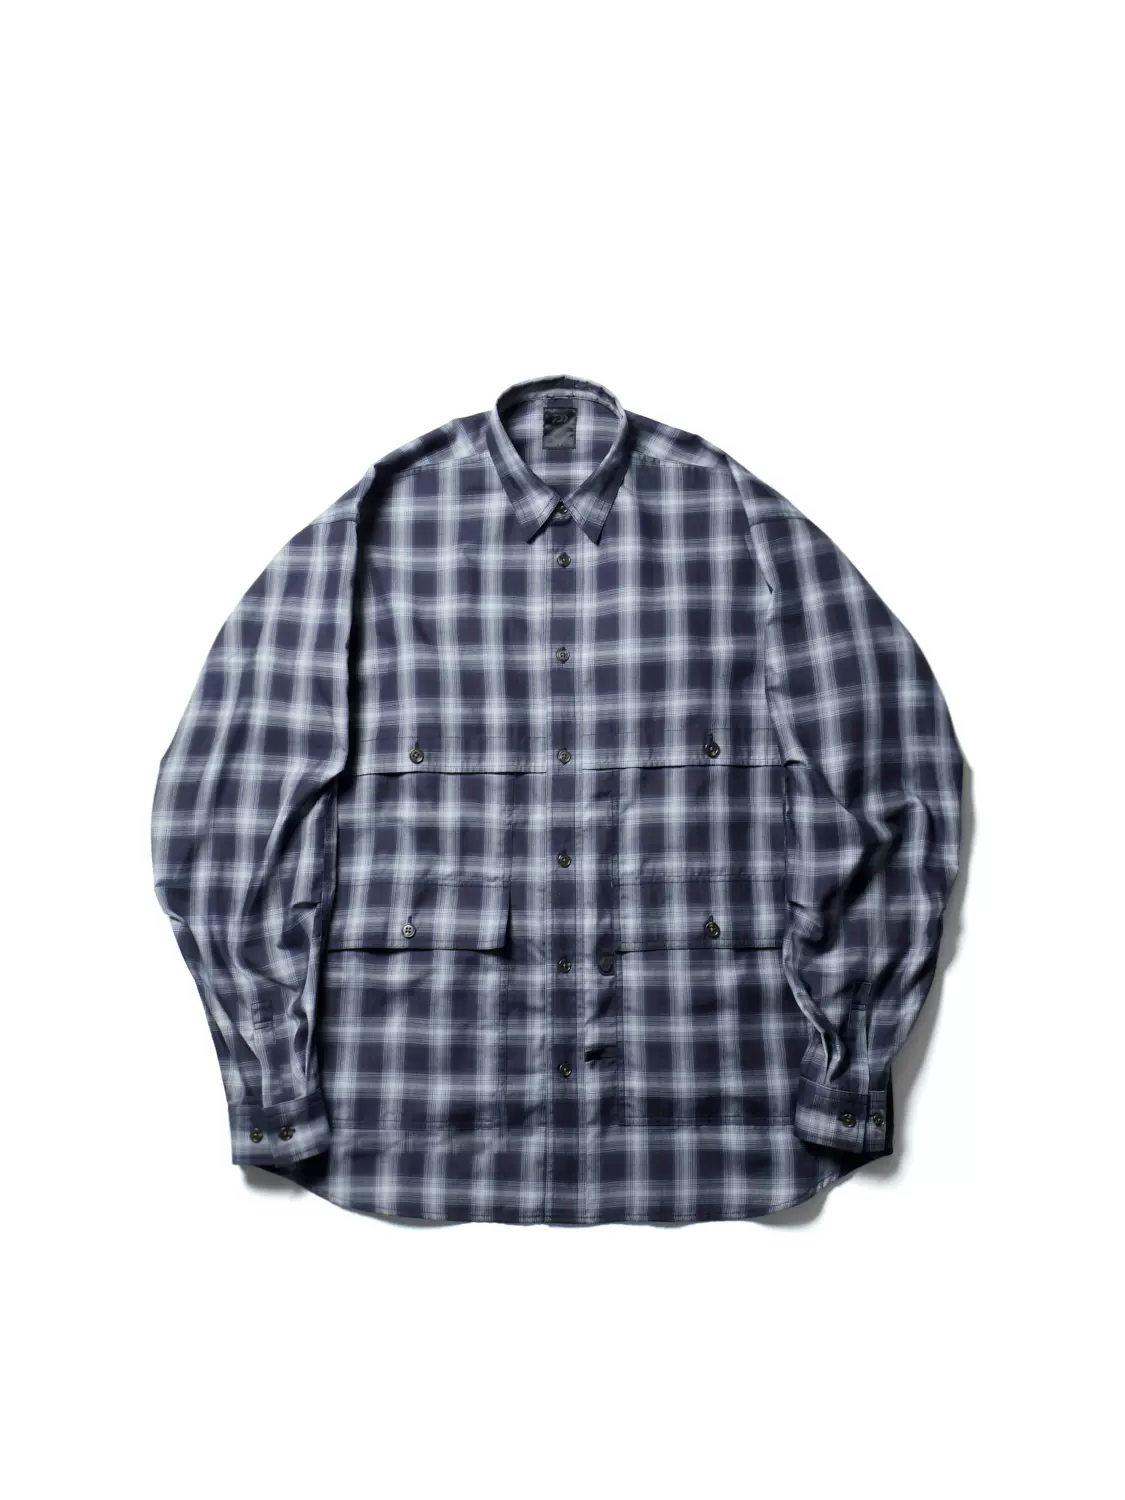 DAIWA PIER39 TECH LOGGER SHIRTS 22AW 格纹宽松口袋长袖衬衫-Taobao